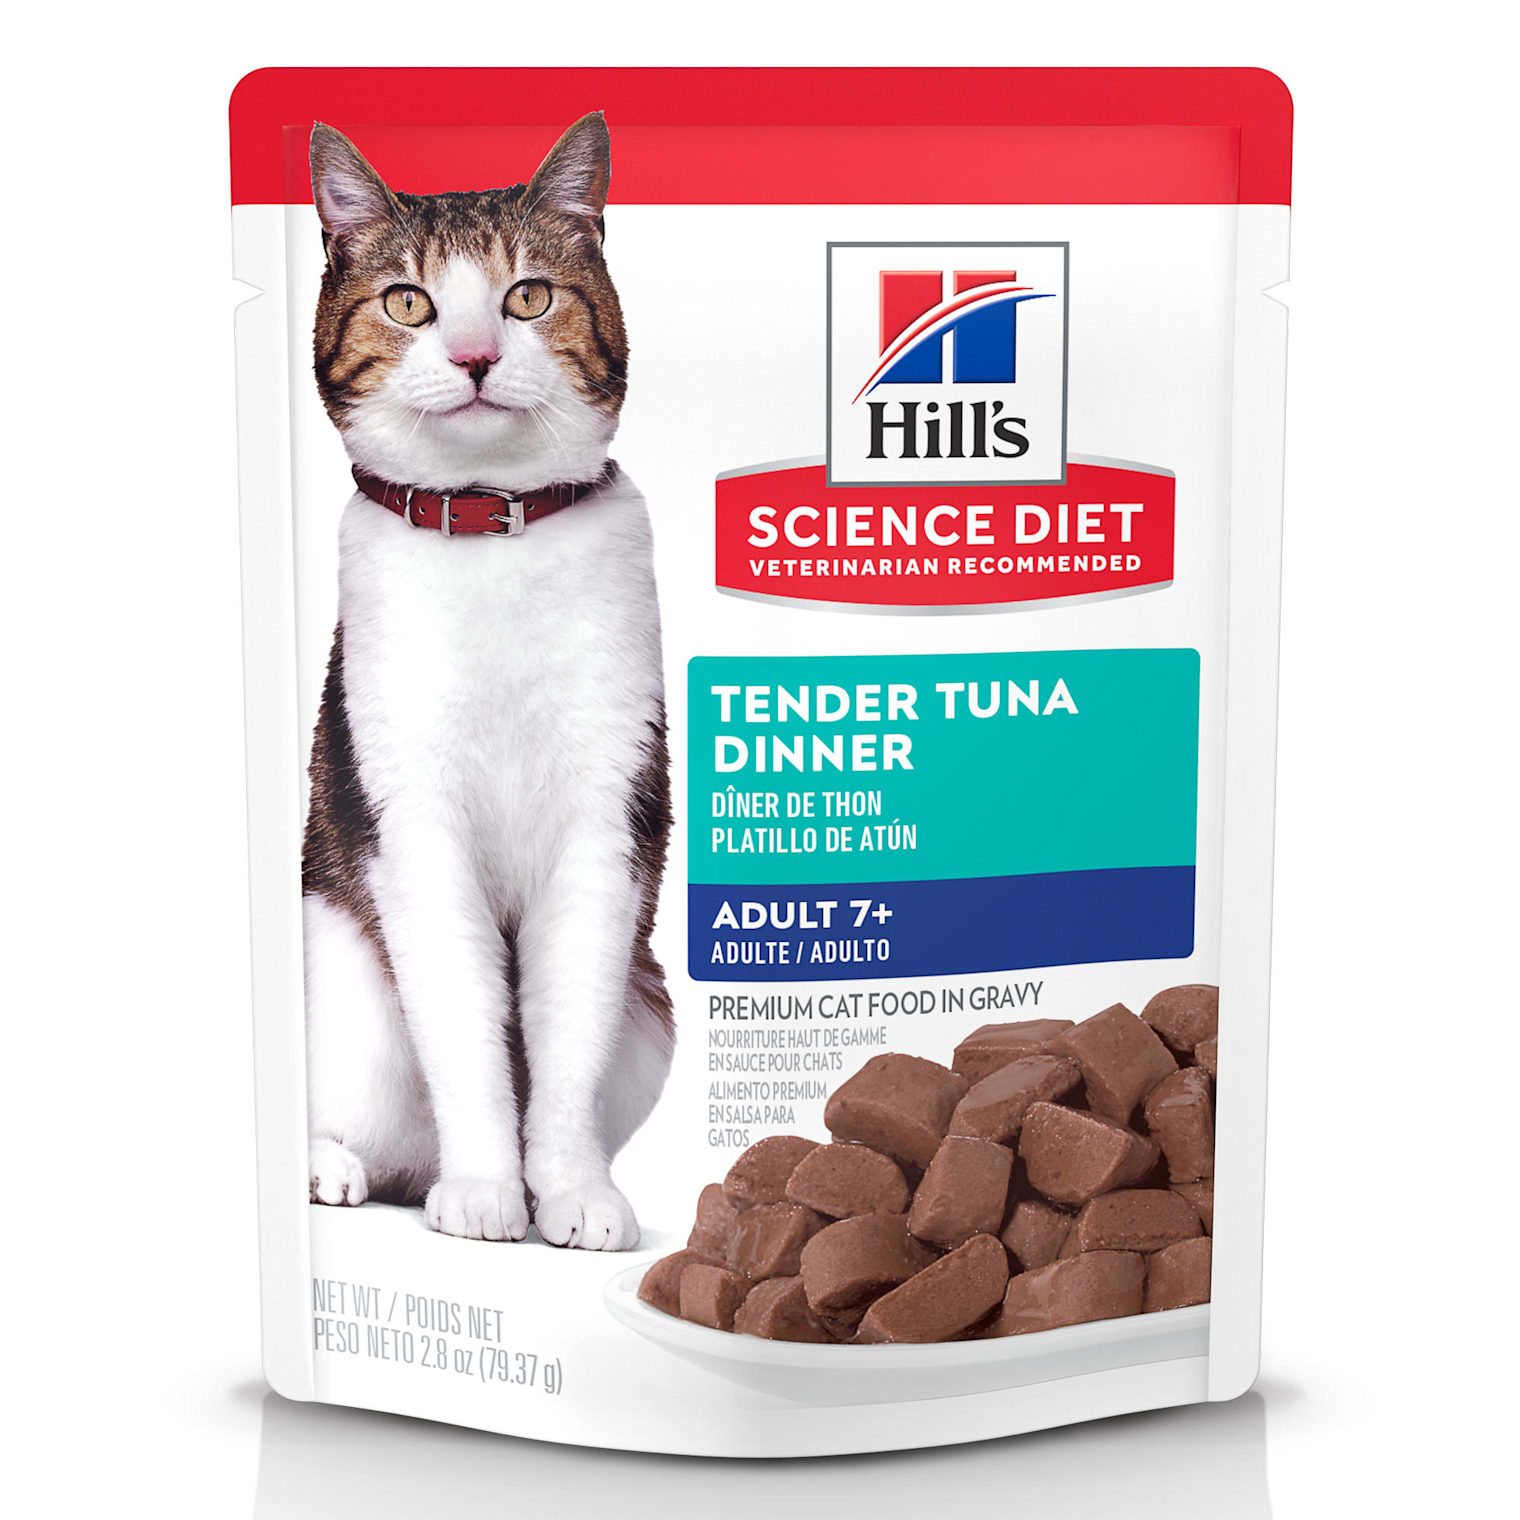 hill's science diet cat food petco